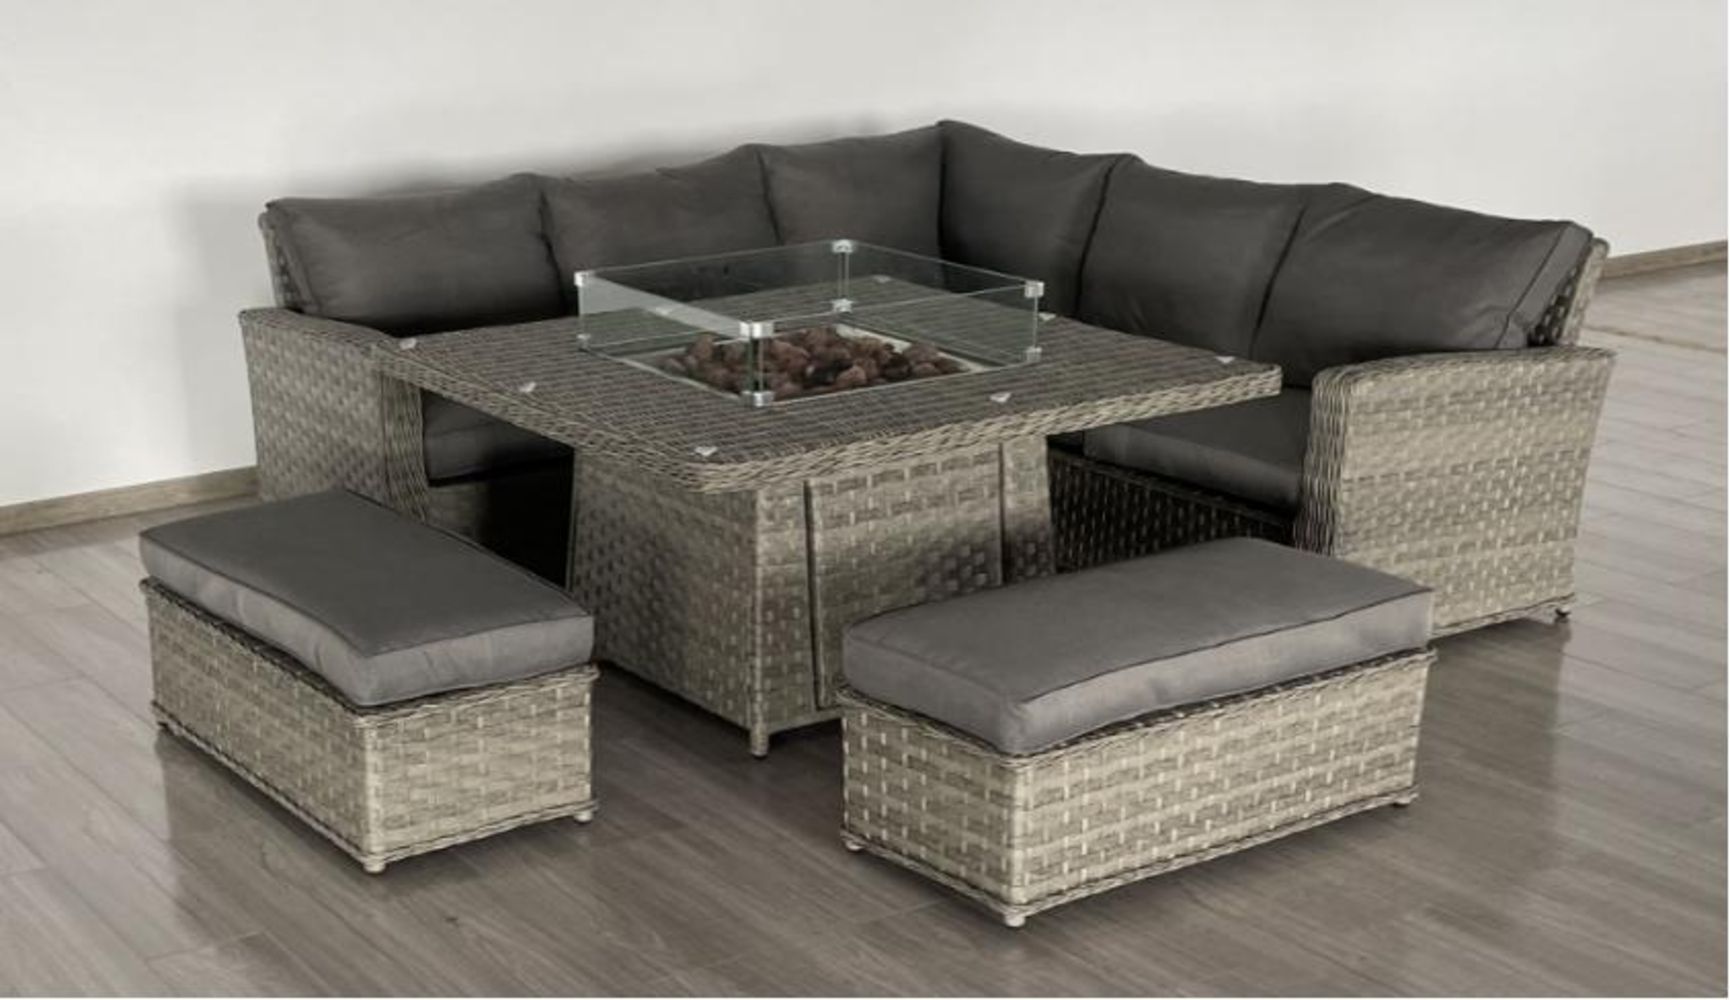 Teak & Rattan Garden Furniture - Very High End Stock Direct From Manufacturer - Fantastic Range Of Colours & Models